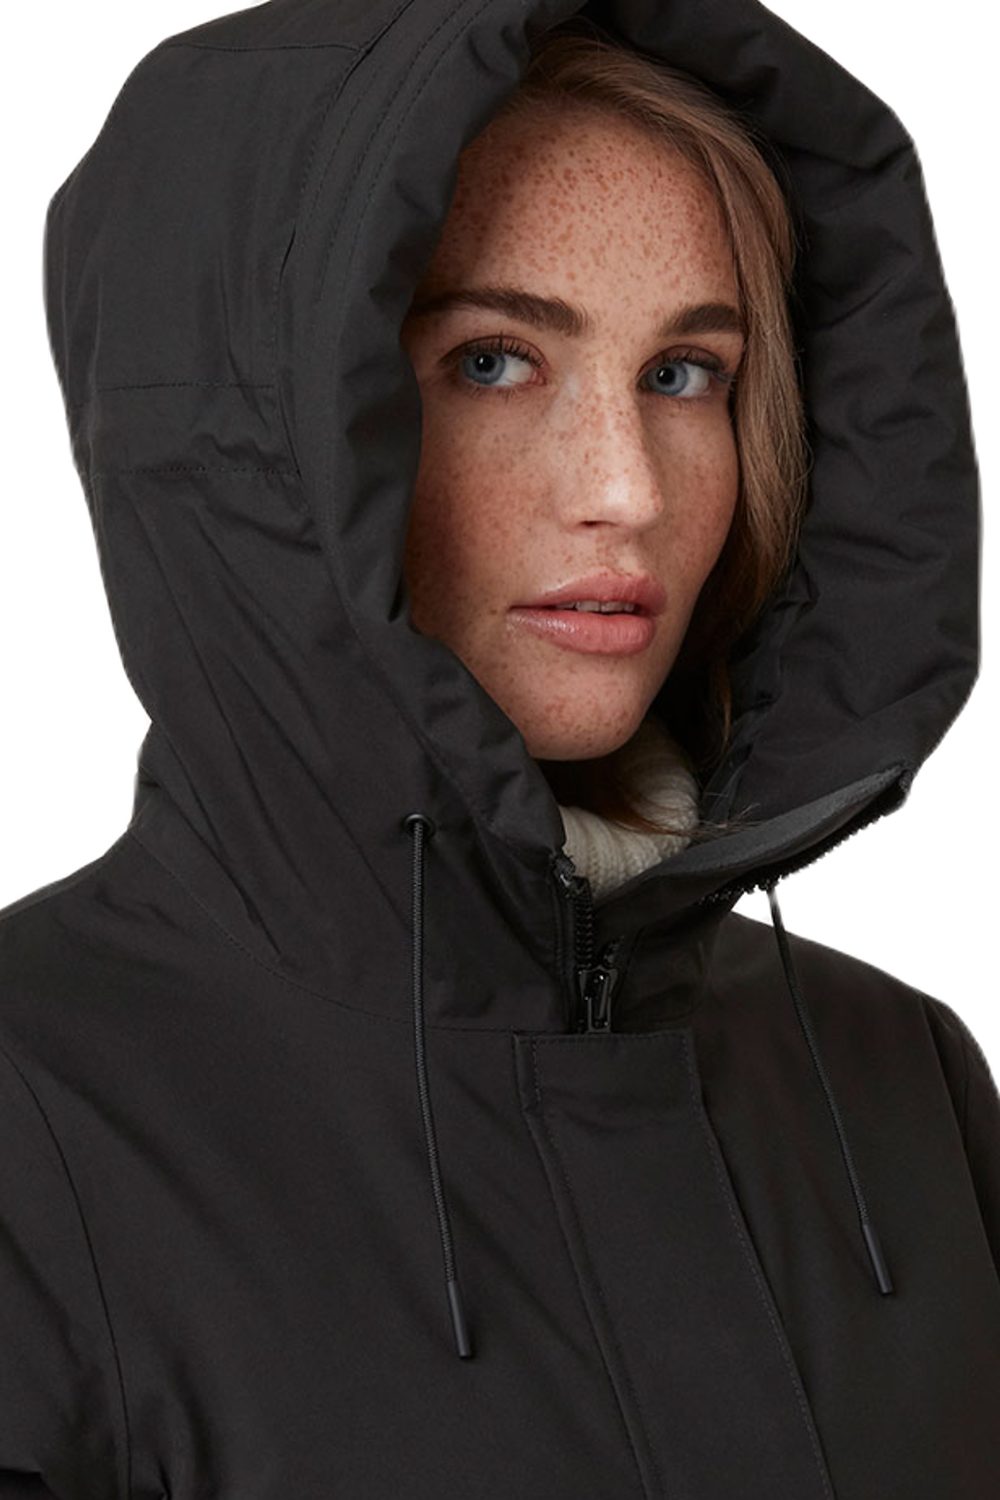 Helly Hansen Victoria Insulated Rain Coat in Black  